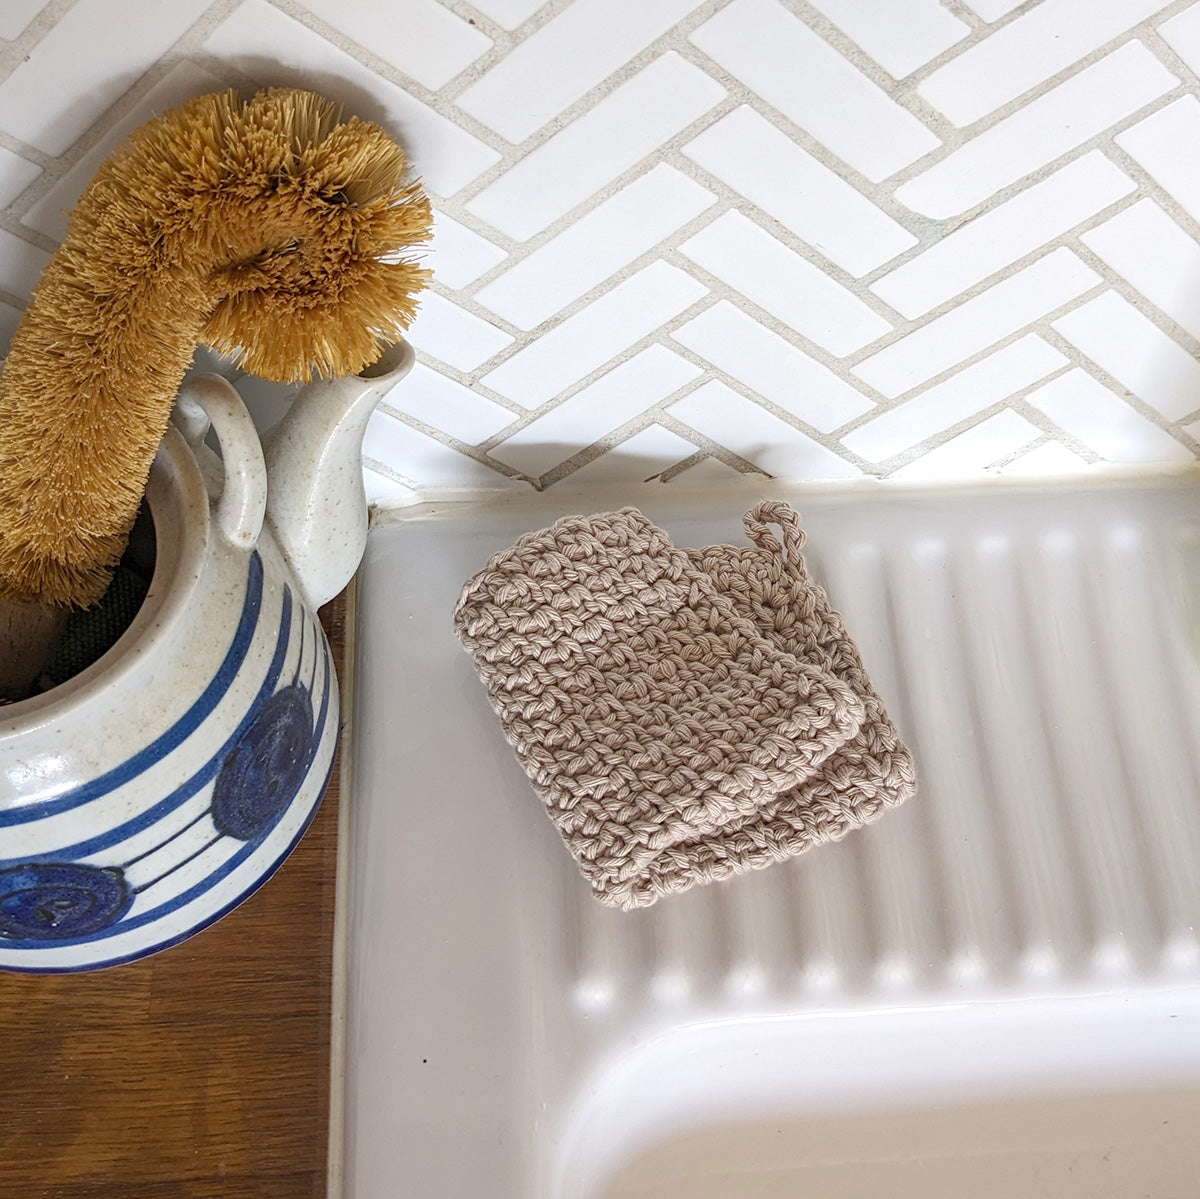 Crochet Cotton Dishcloth